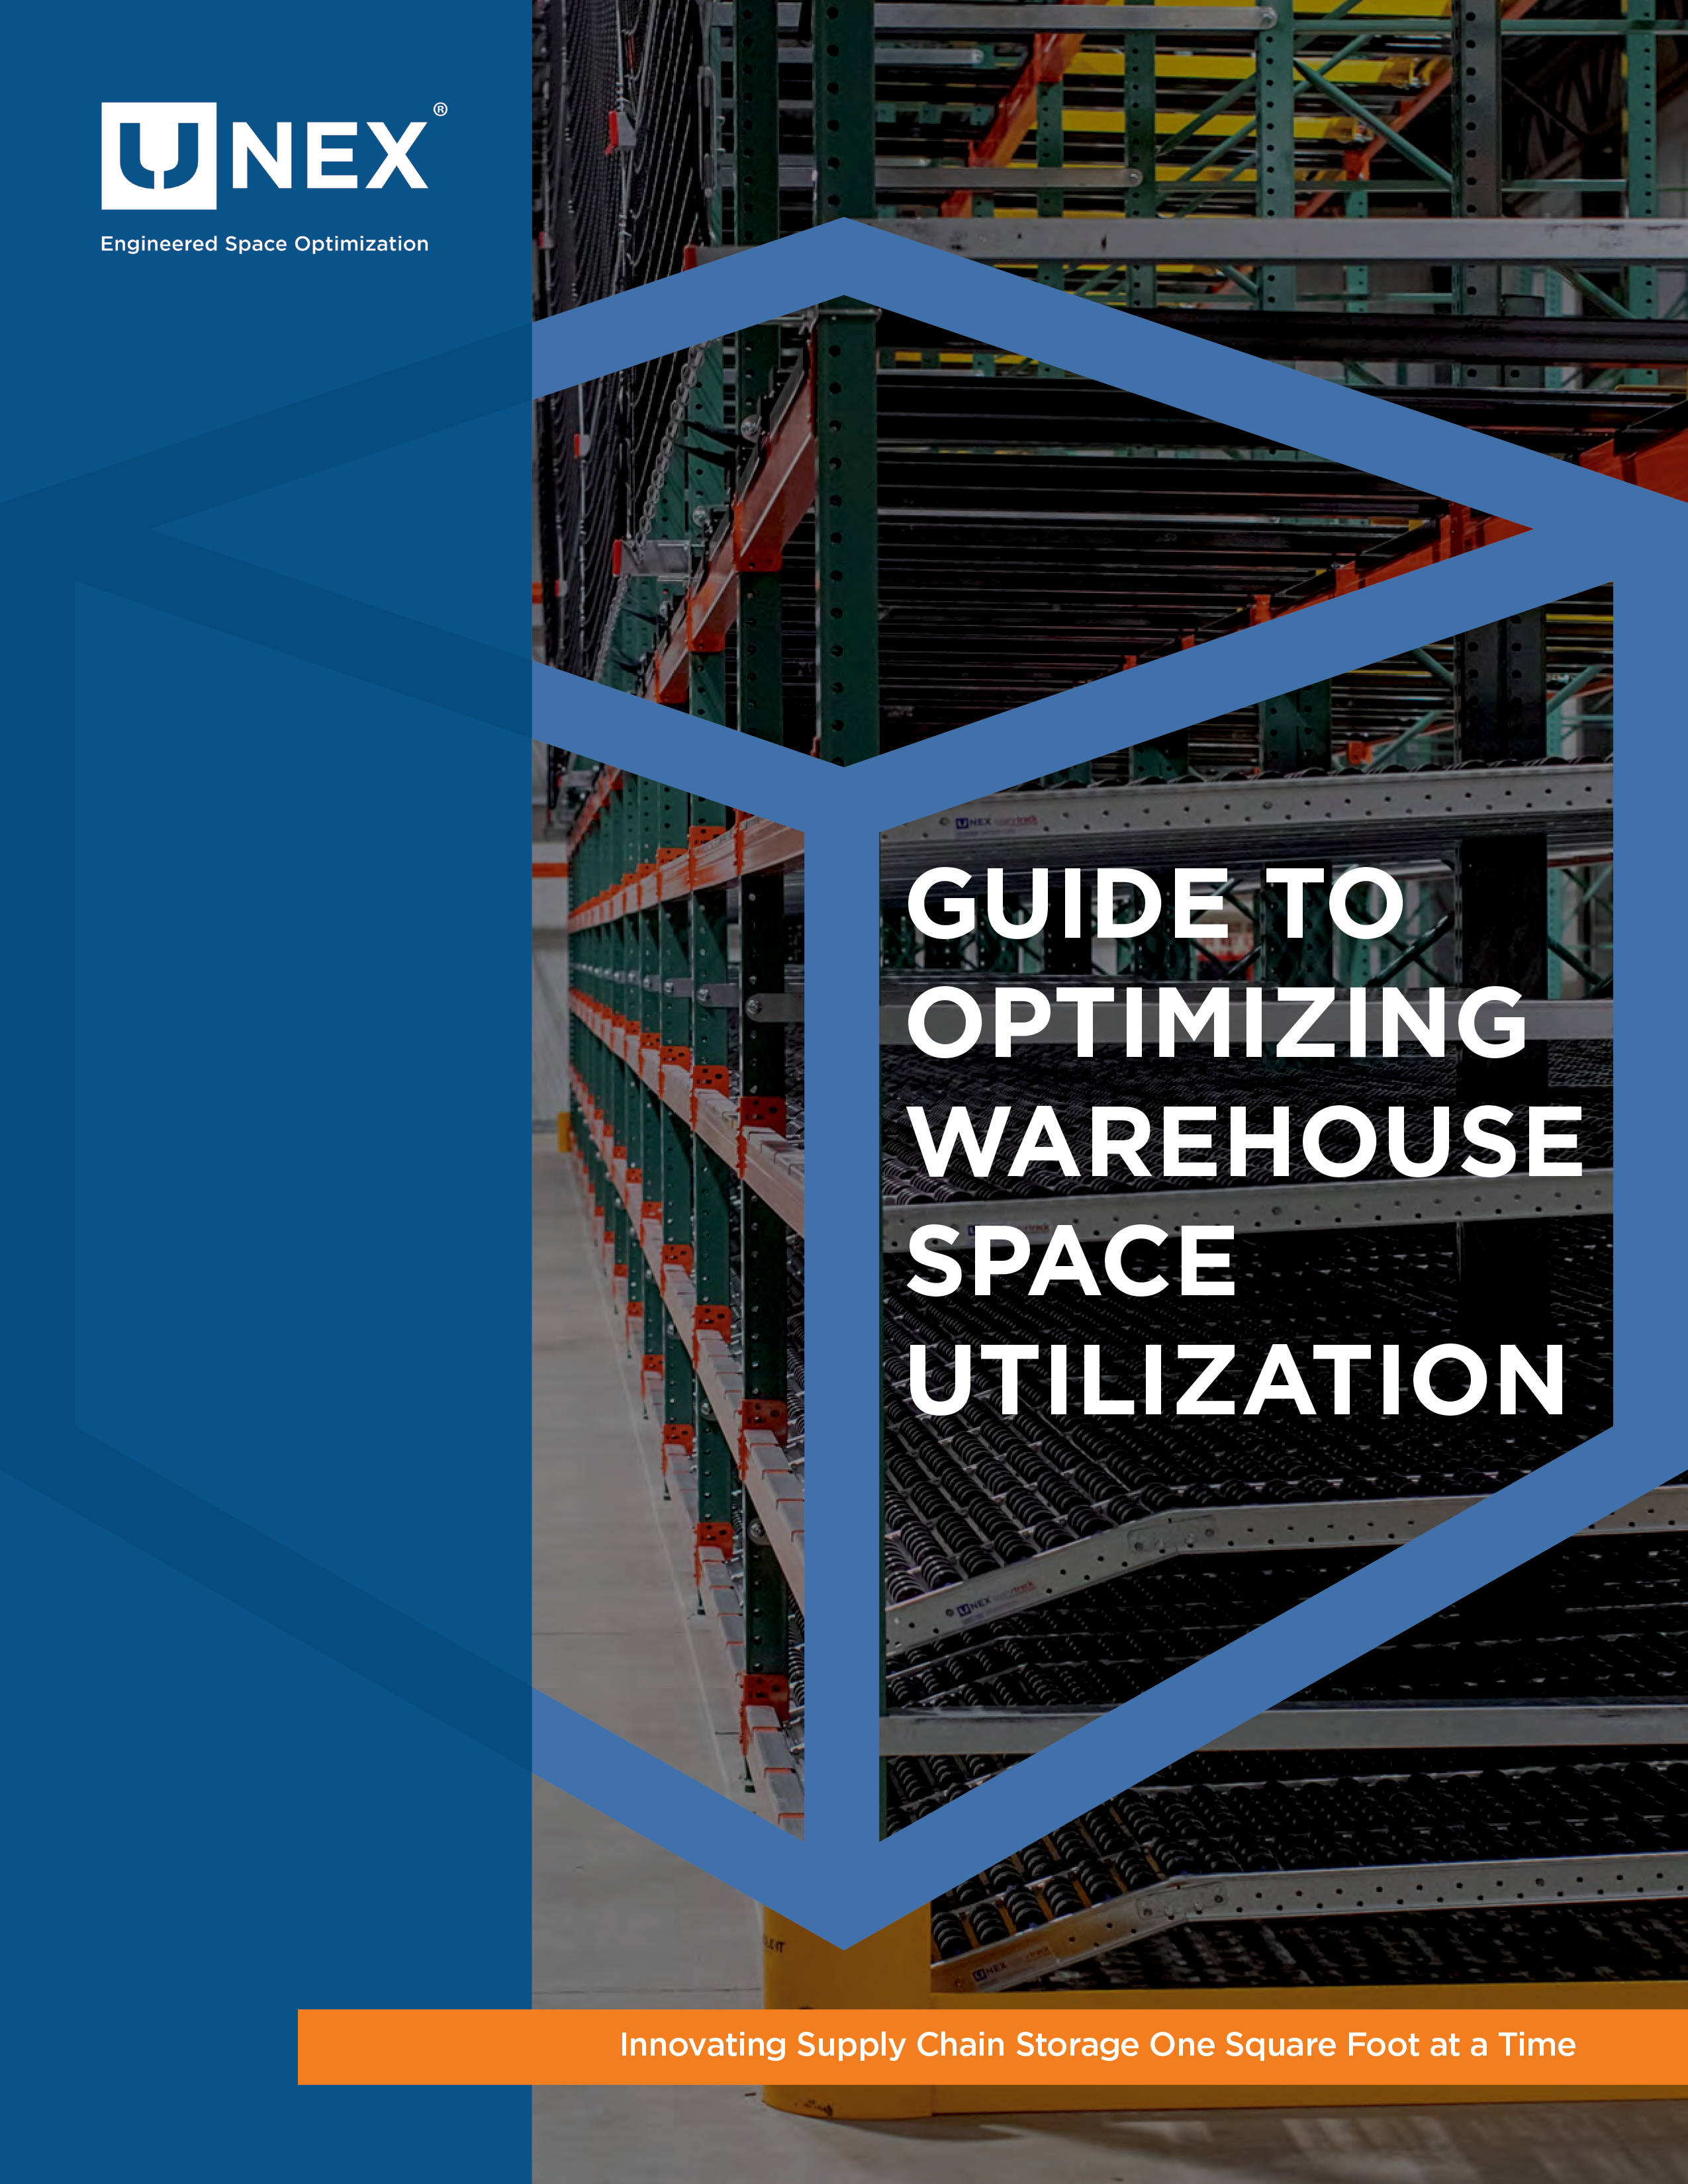 UNEX-Warehouse-Space-Optimization-Cover